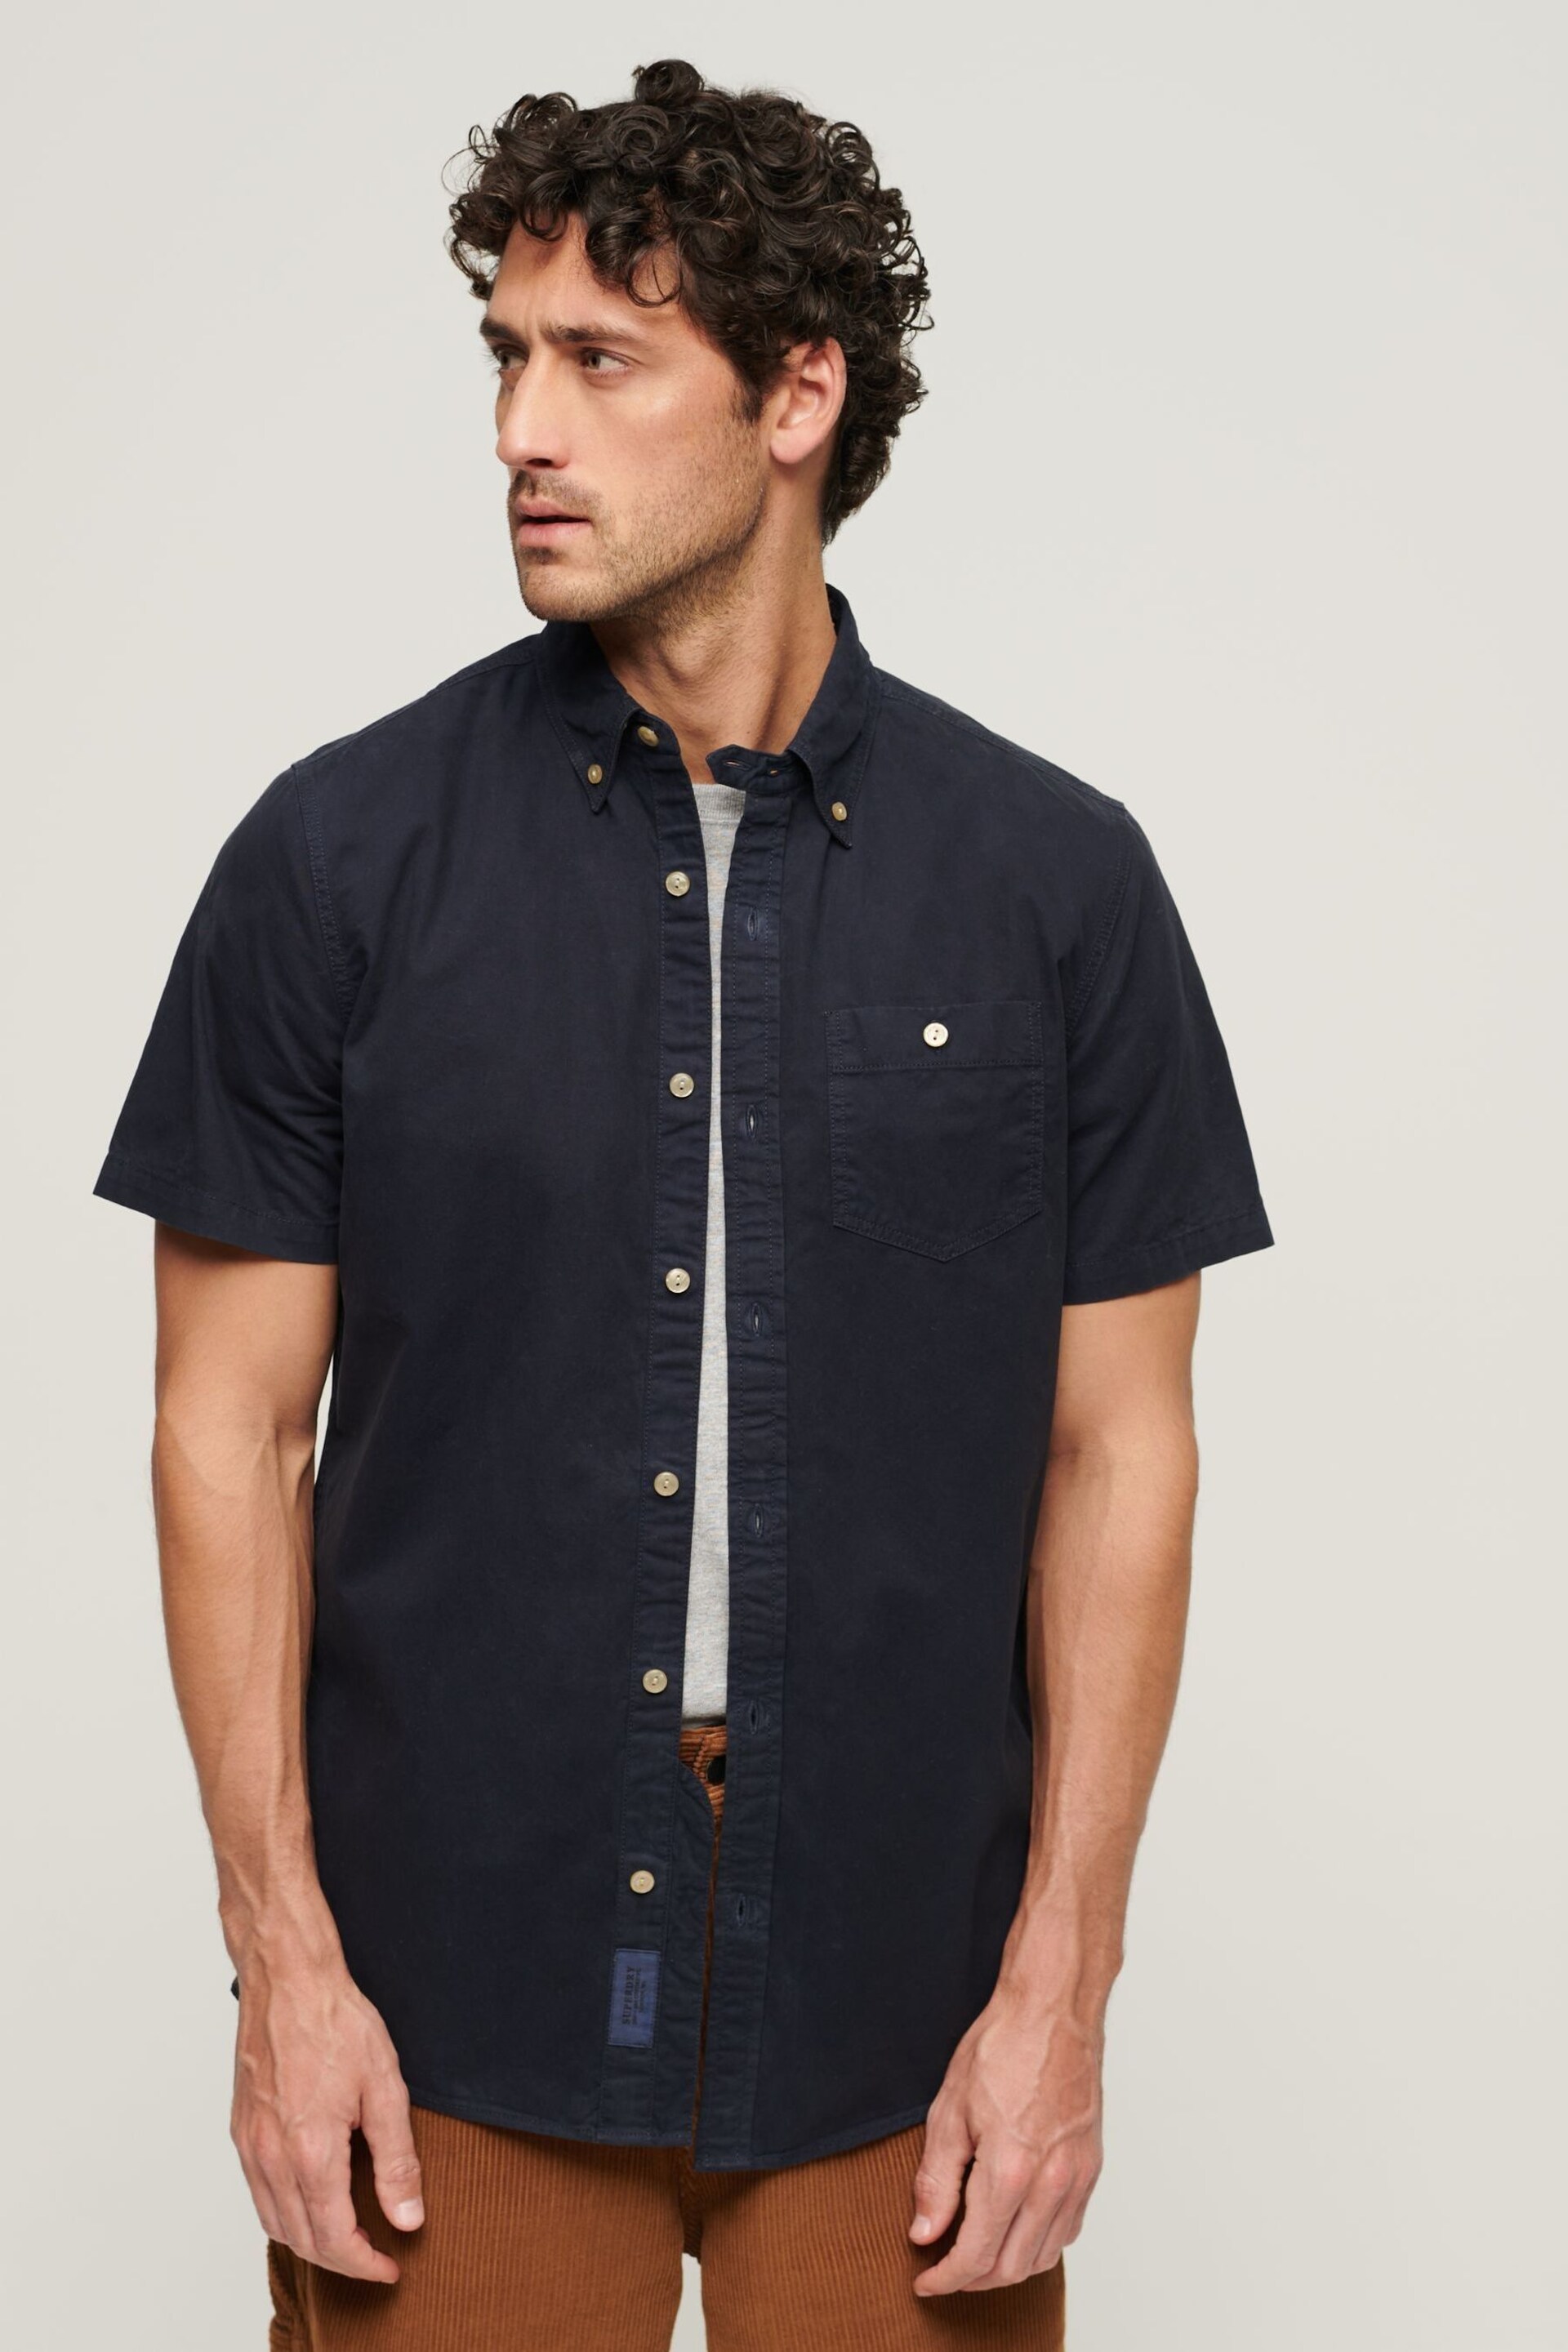 Superdry Blue Merchant Store Short Sleeve Shirt - Image 1 of 5